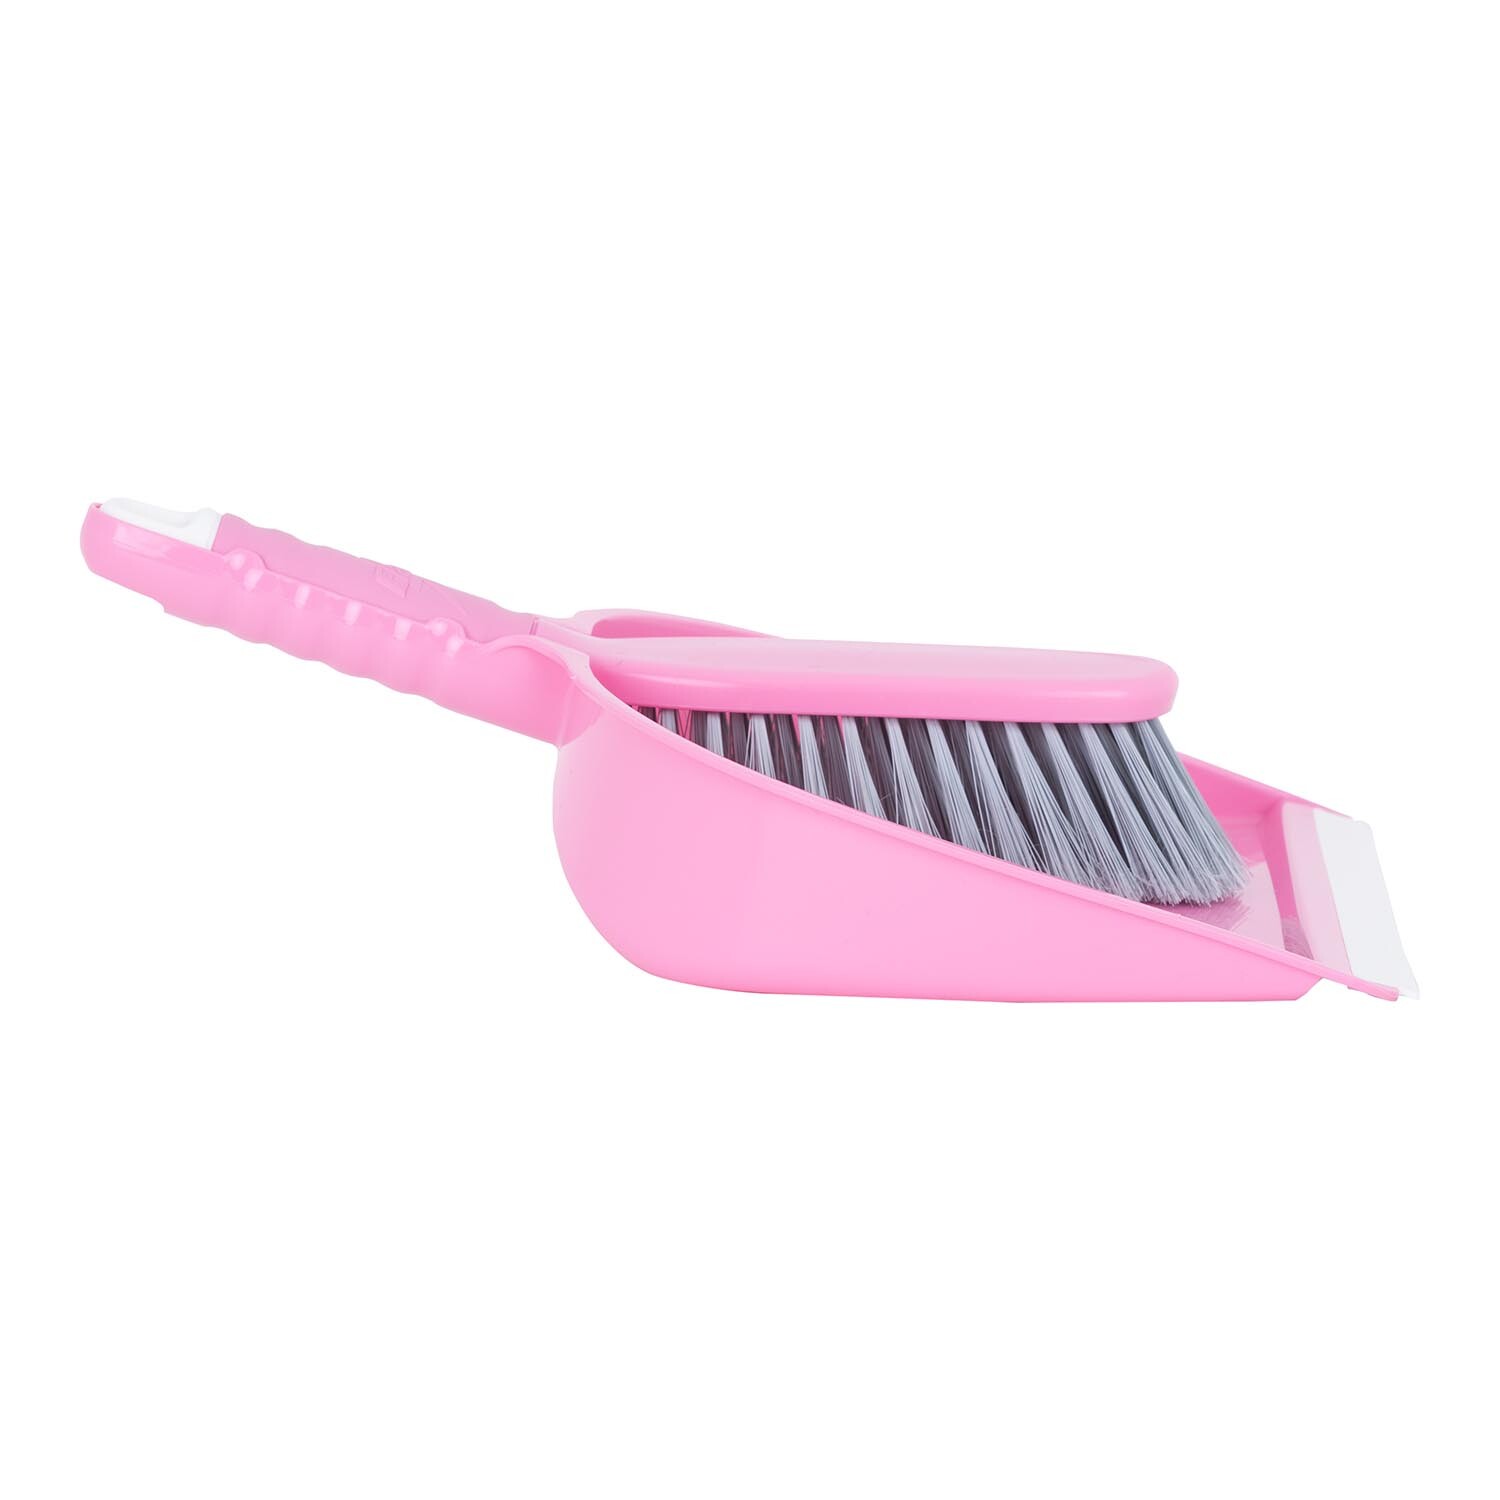 Flash Dustpan and Brush Set - Pink Image 3